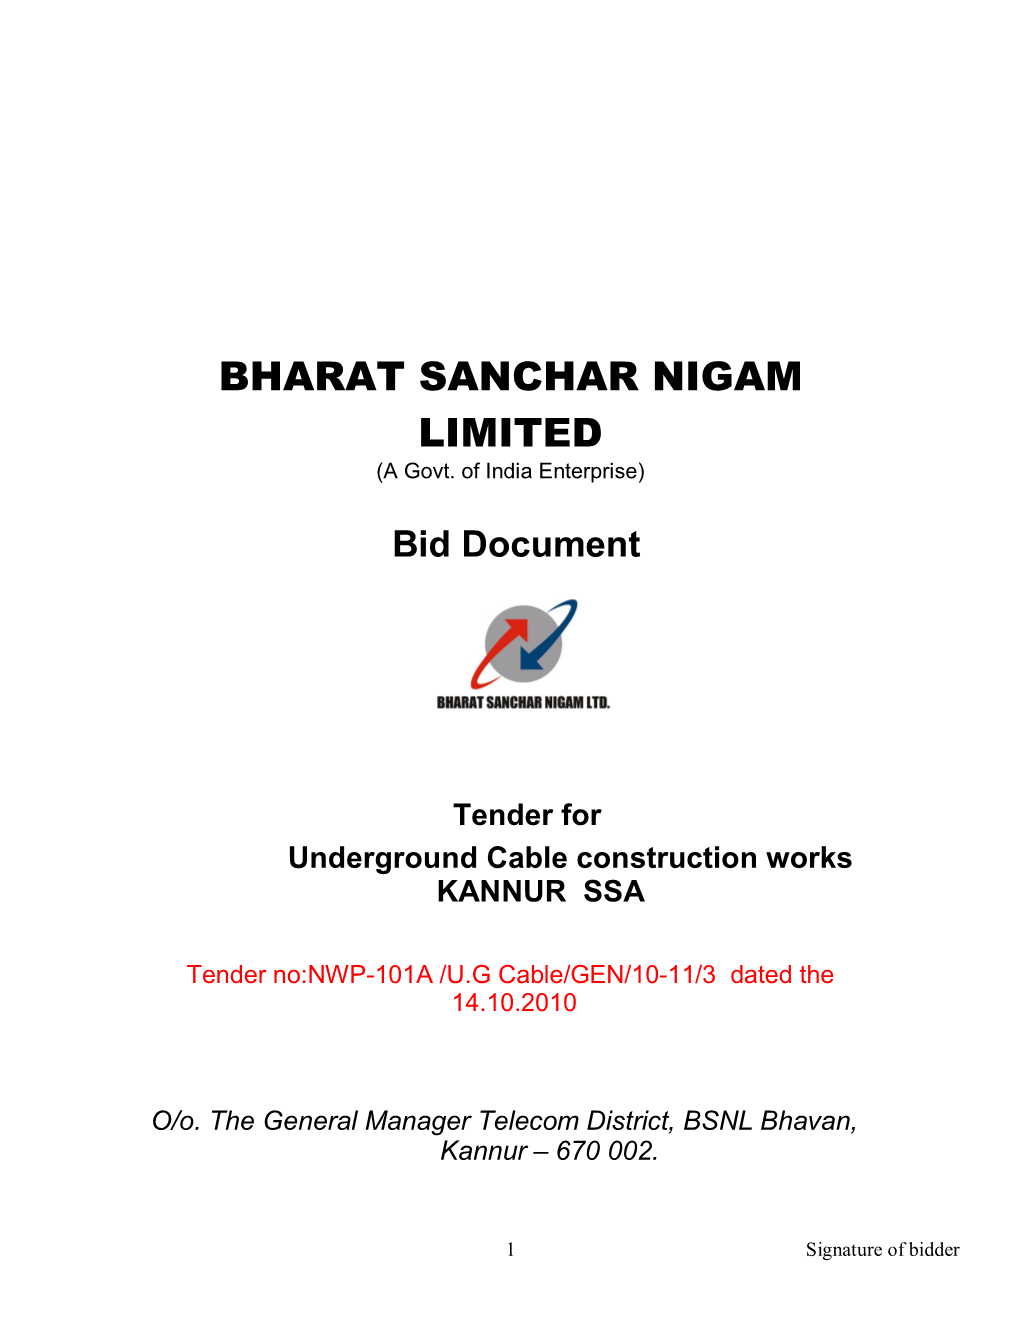 Bharat Sanchar Nigam Limited